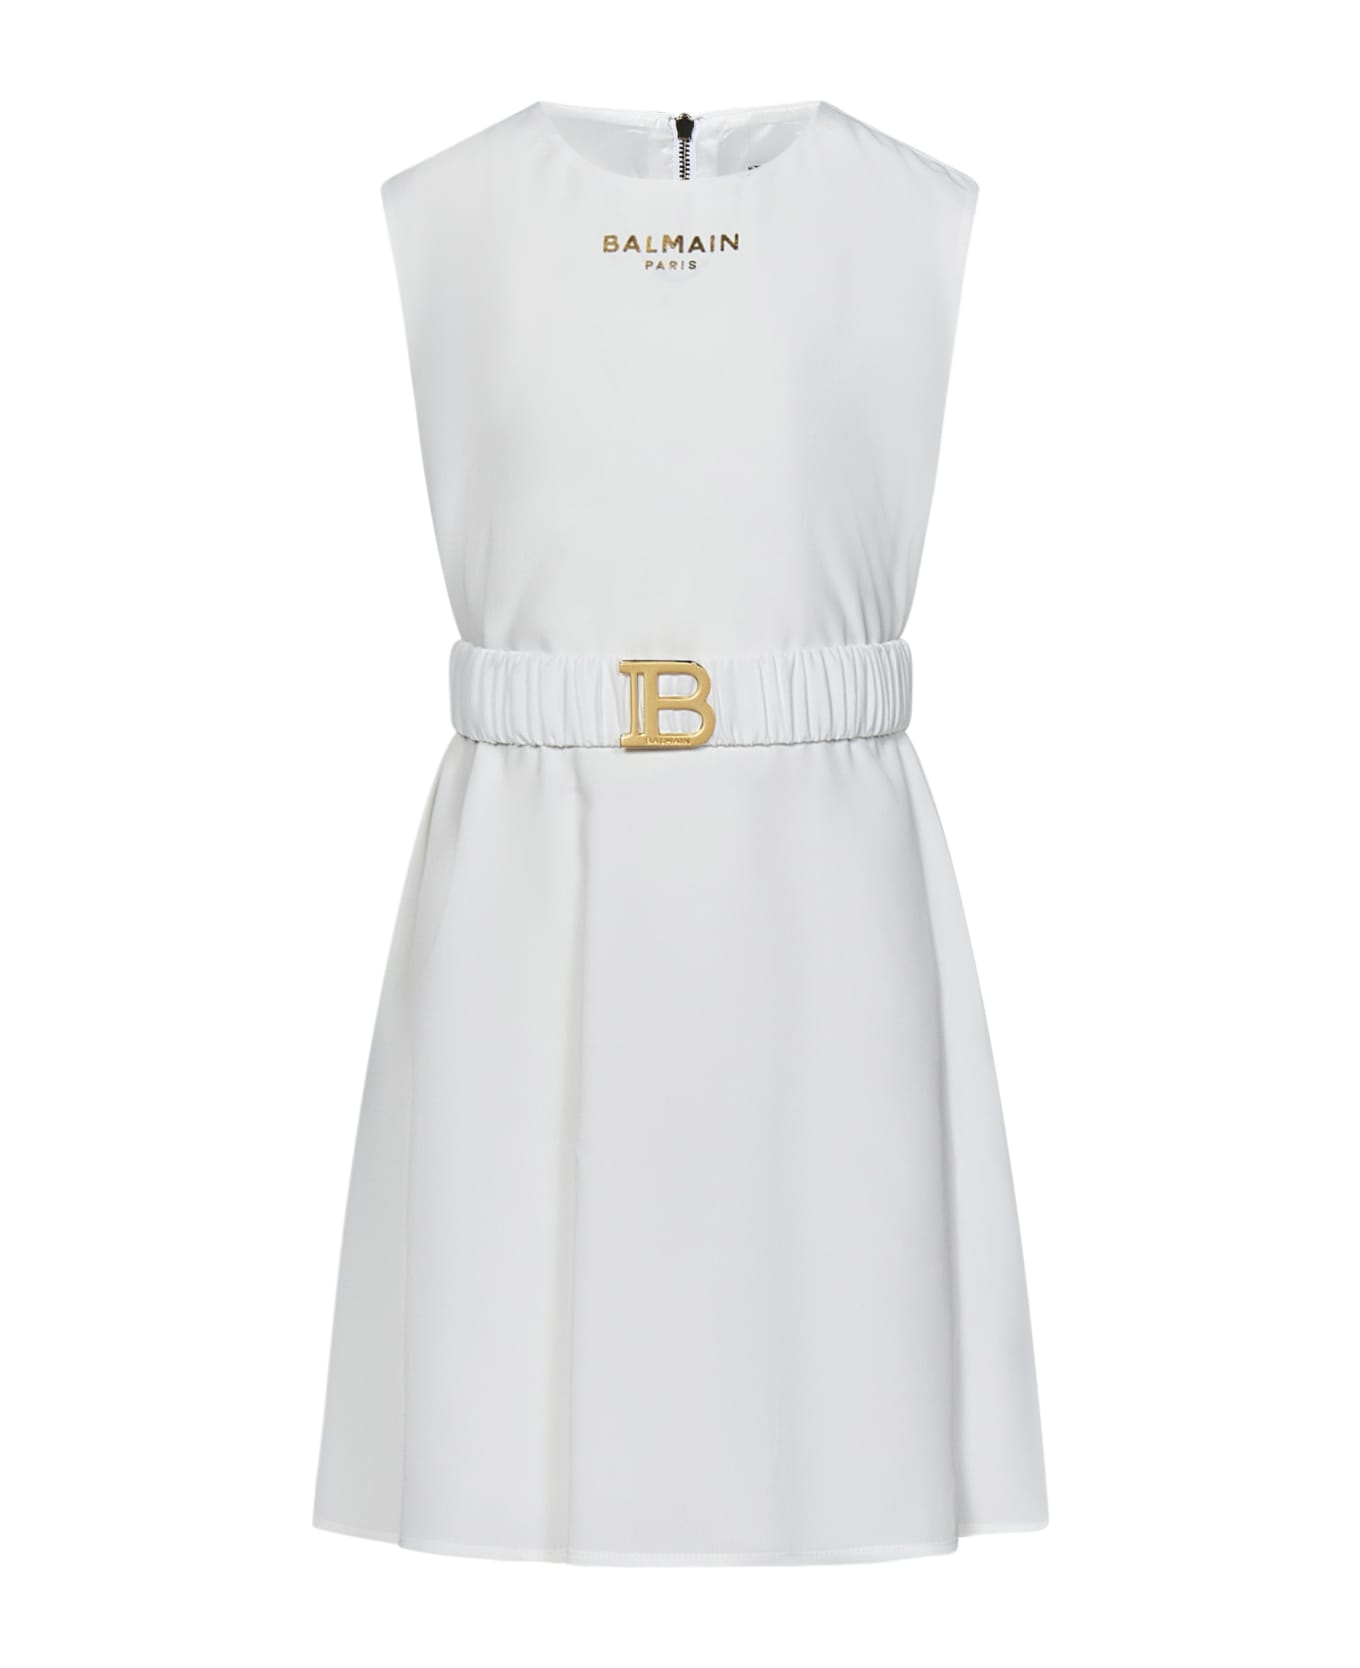 Balmain Dress - ivory/gold